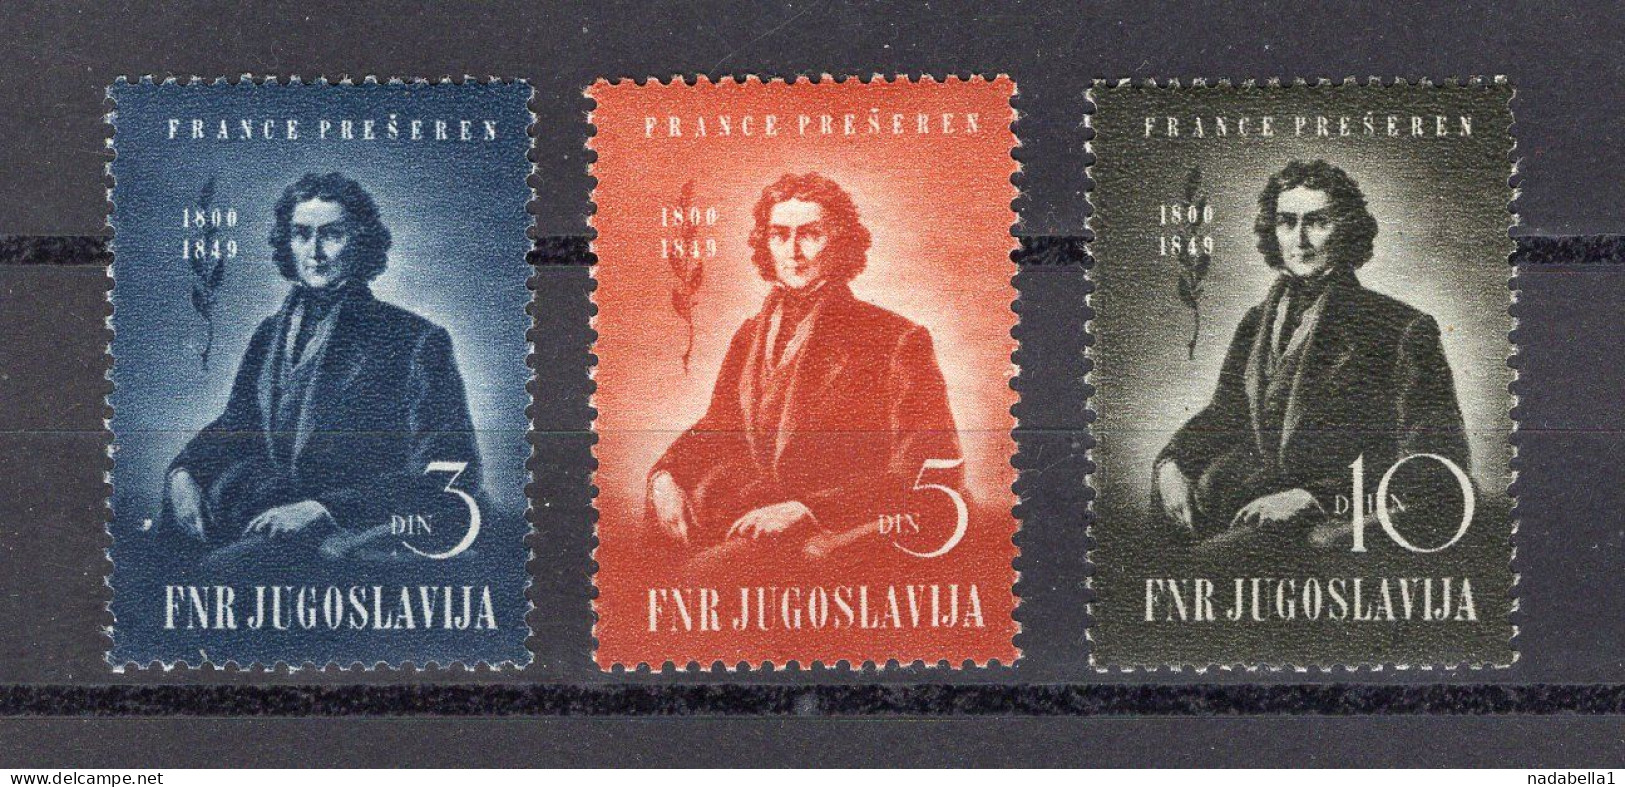 1949. YUGOSLAVIA,FRANCE PRESEREN 1800-1949,SET OF 3 STAMPS,MNH - Unused Stamps